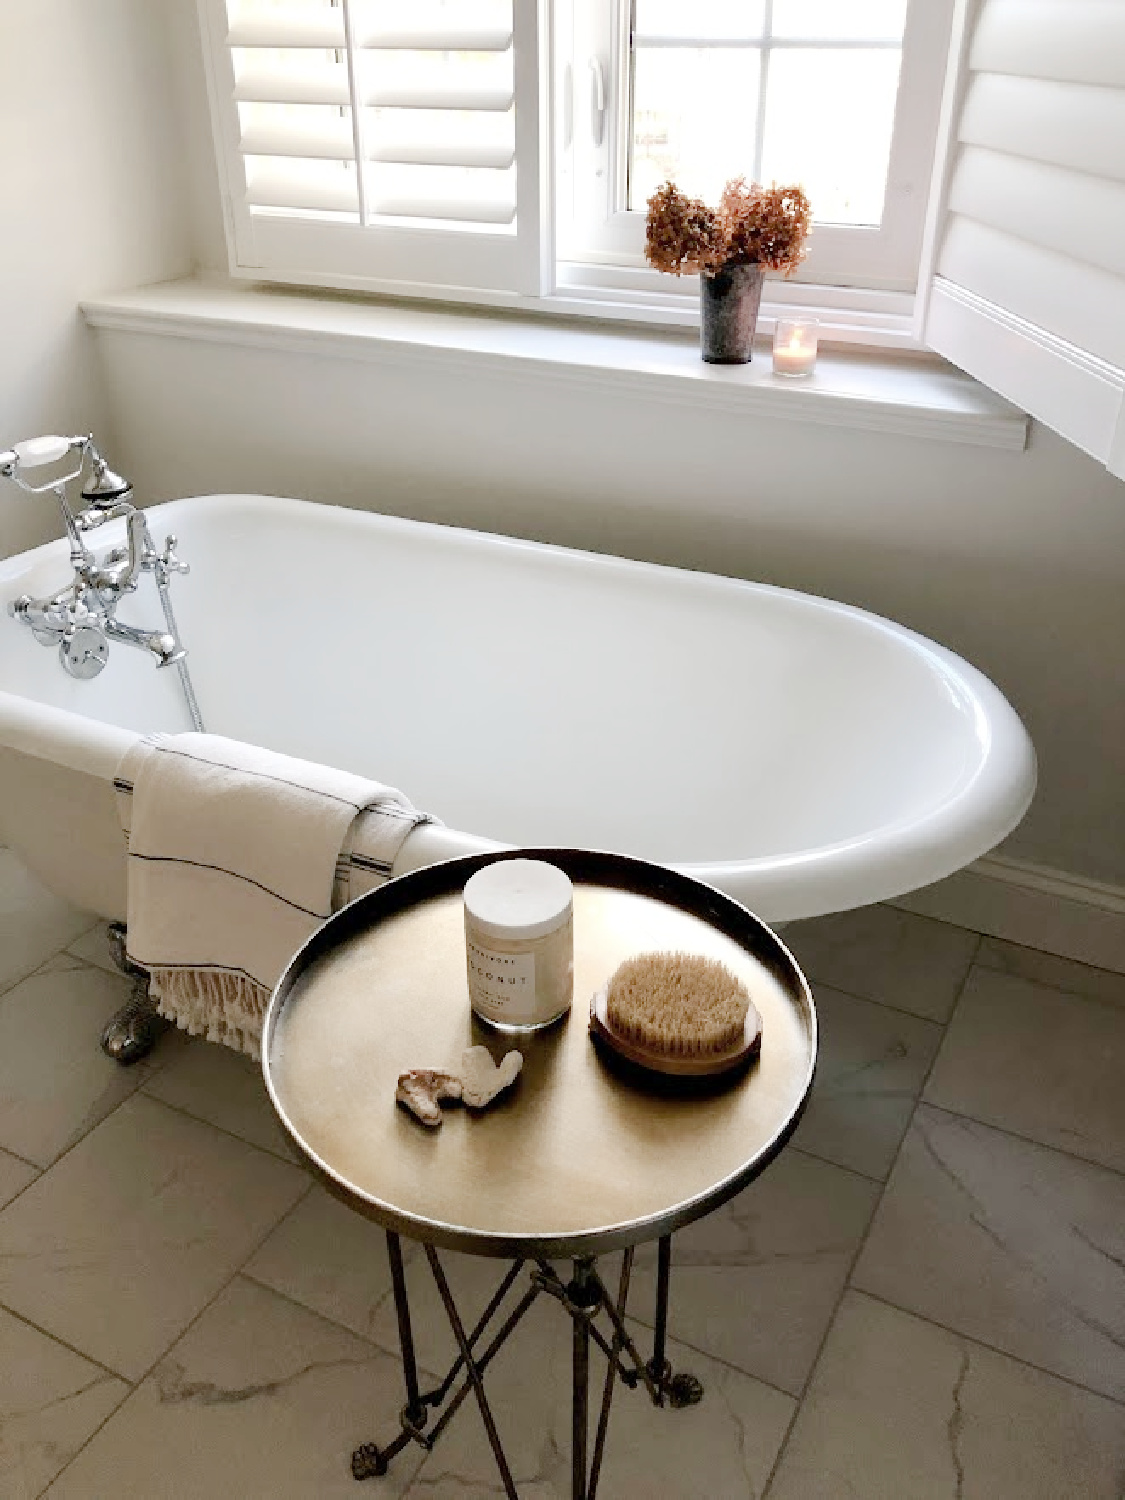 My serene bathroom with vintage clawfoot tub, Turkish towels, accent tray table, and plantation shutters - Hello Lovely Studio. #vintagebath #spalikebath #modernvintage #serenedecor